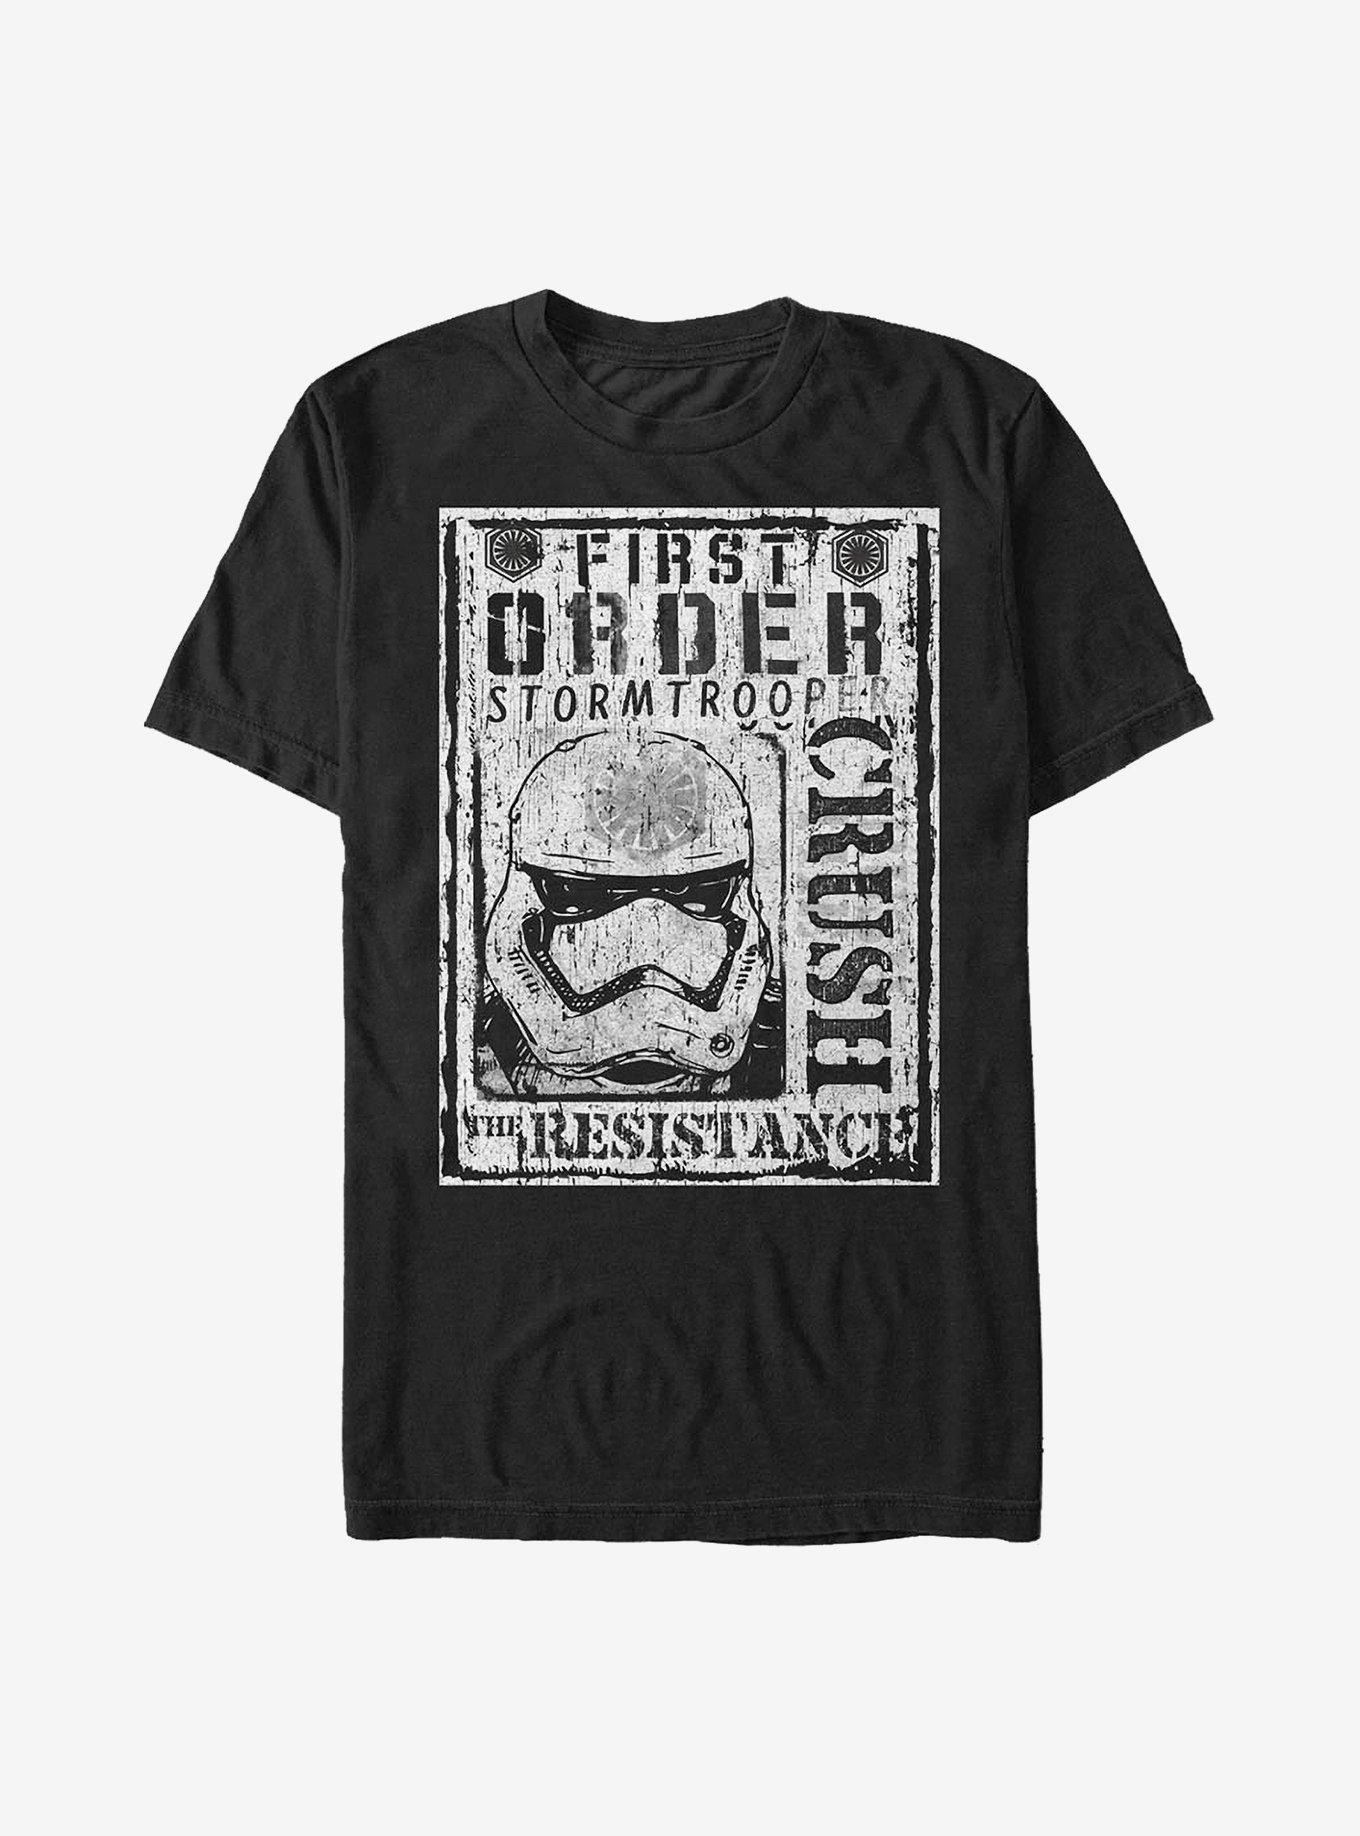 Star Wars: The Force Awakens Trooper Flyer T-Shirt